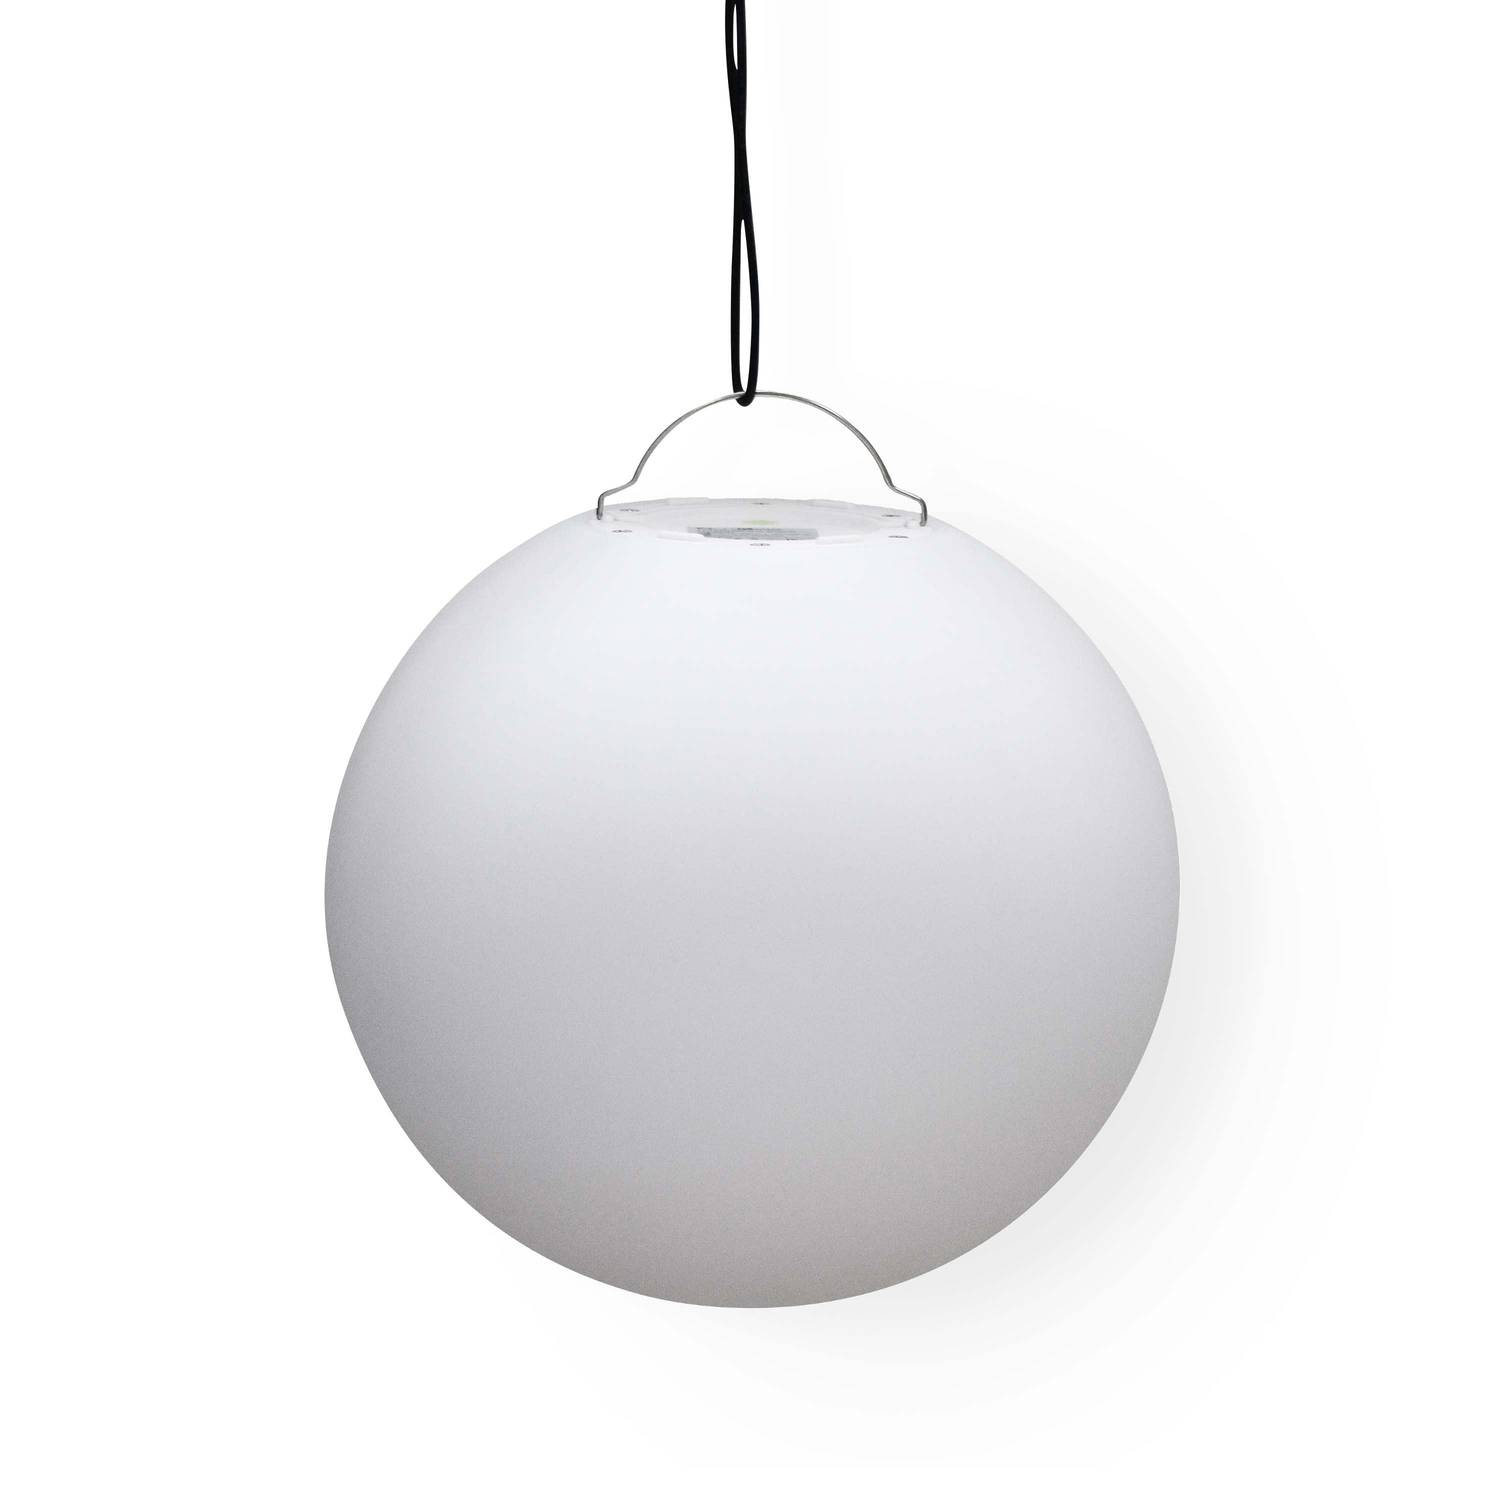 30cm spherical LED lamp – Decorative light sphere, remote control, Warm white Photo1